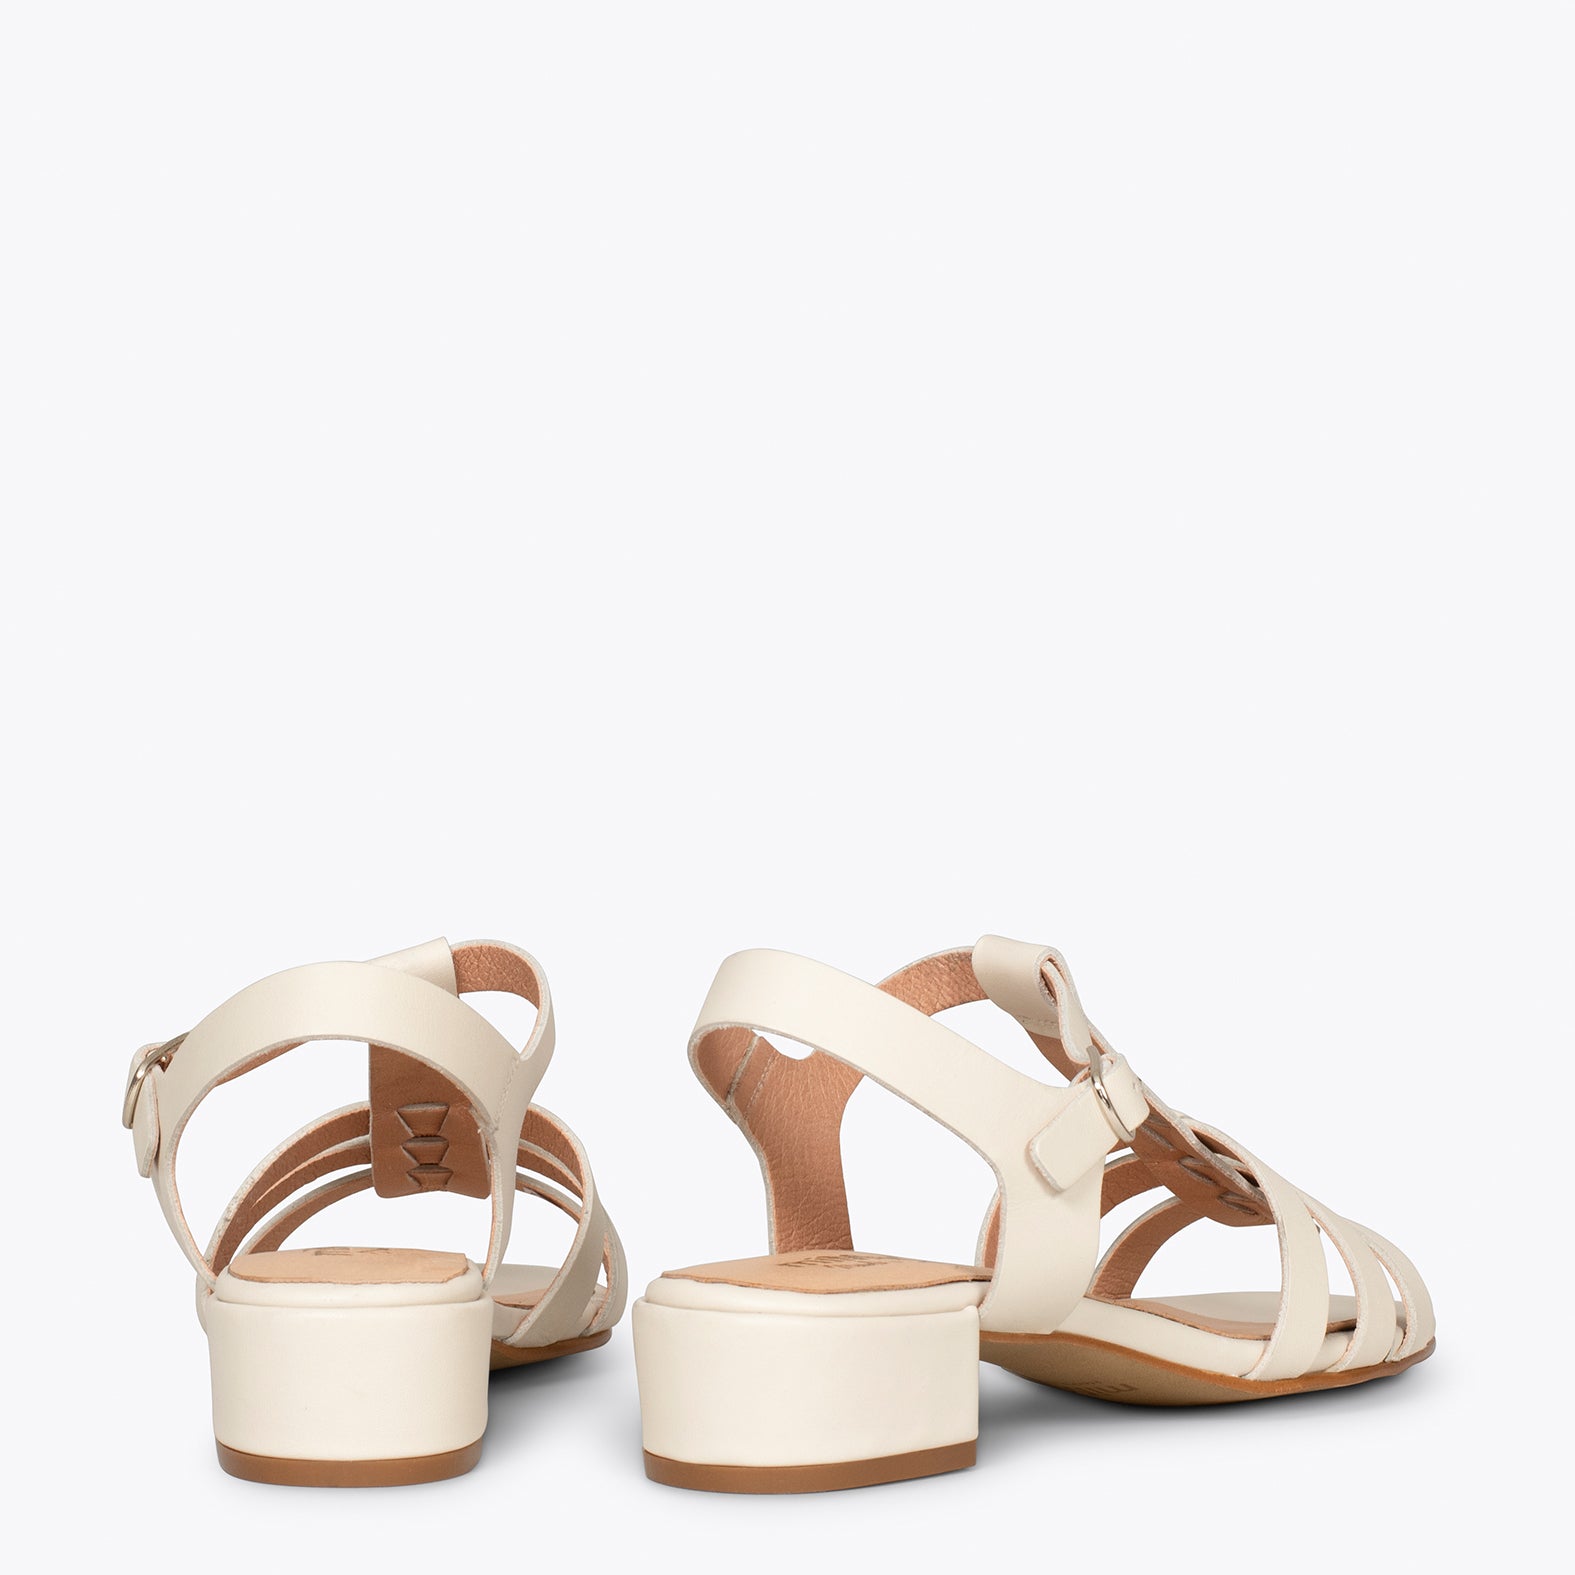 SOPHIE – WHITE low heeled sandal